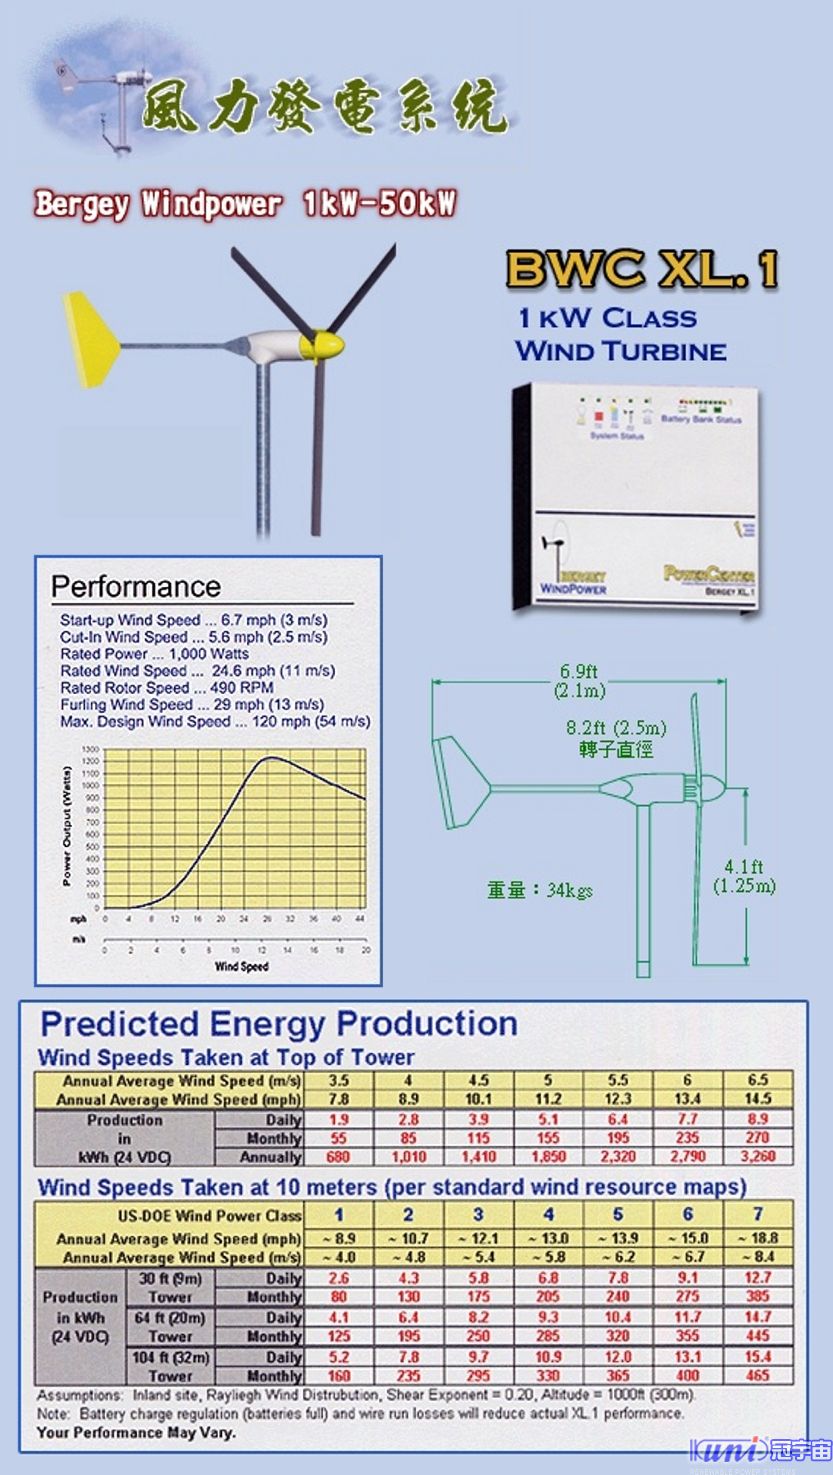 Bergey Windpower 1 kW - 50 kW(圖1)